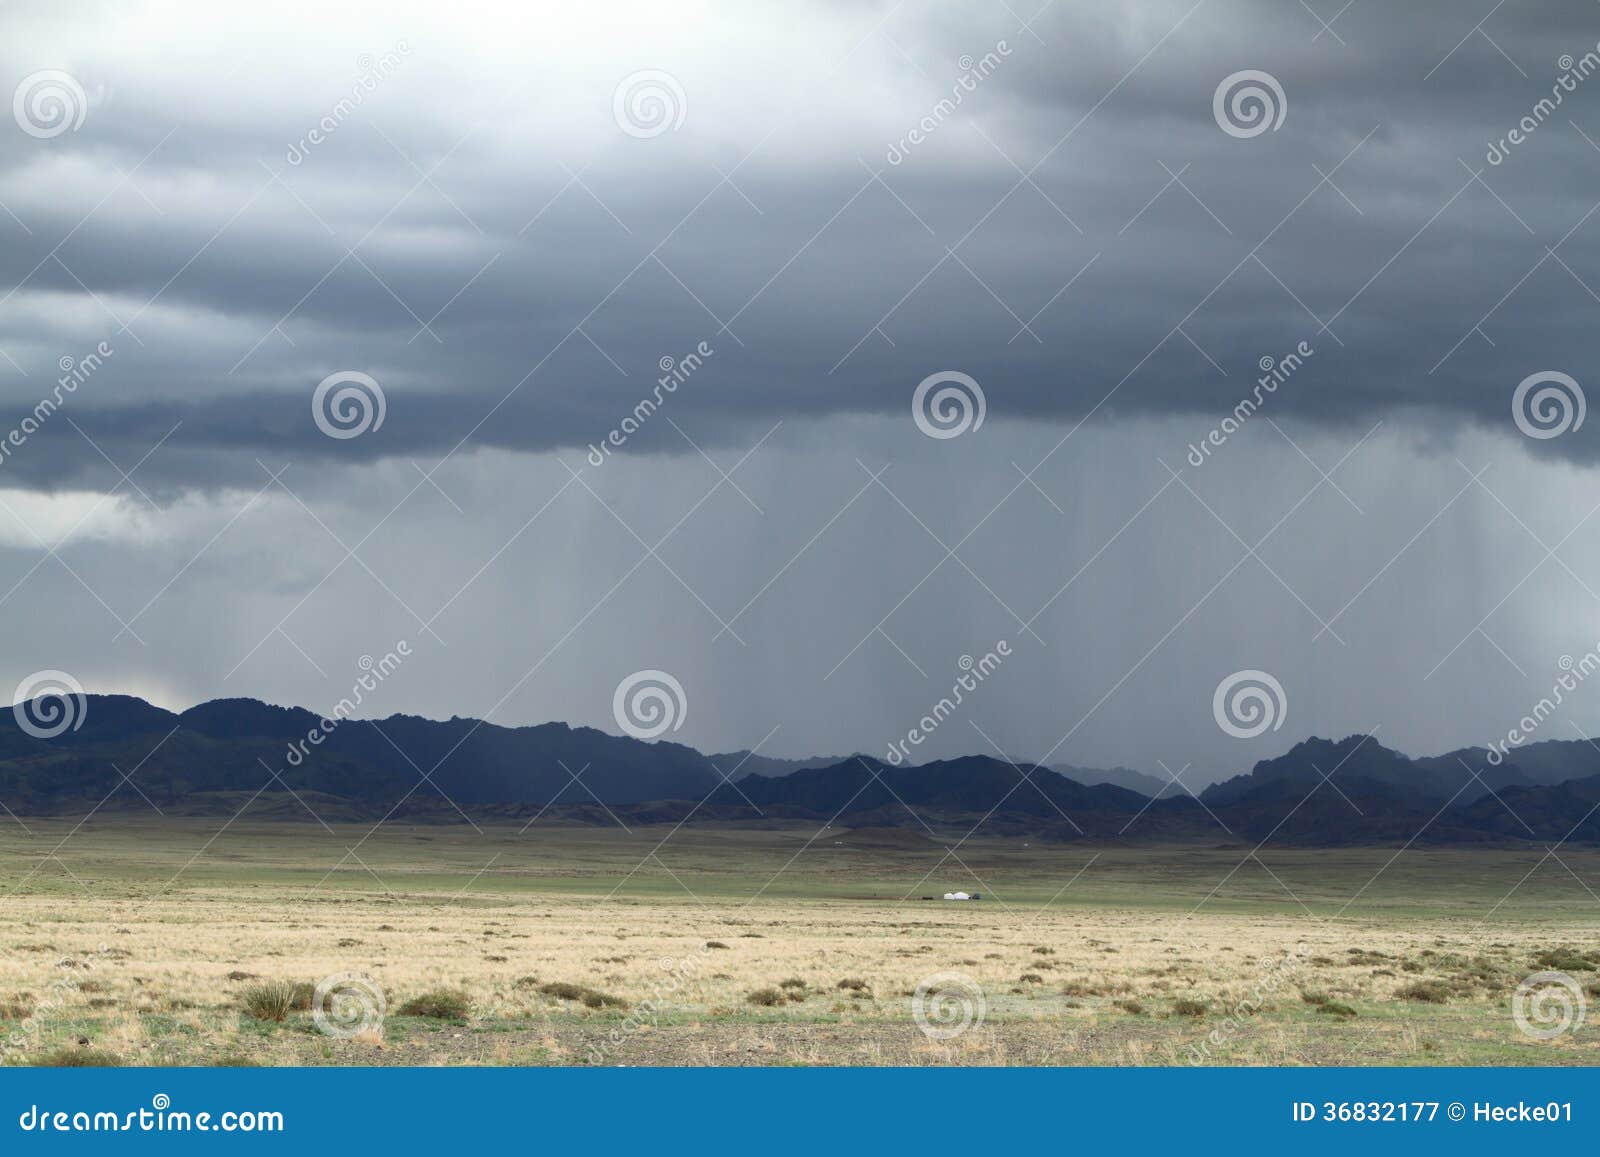 Rainy Season in Mongolia stock image. Image of mongolia - 36832177